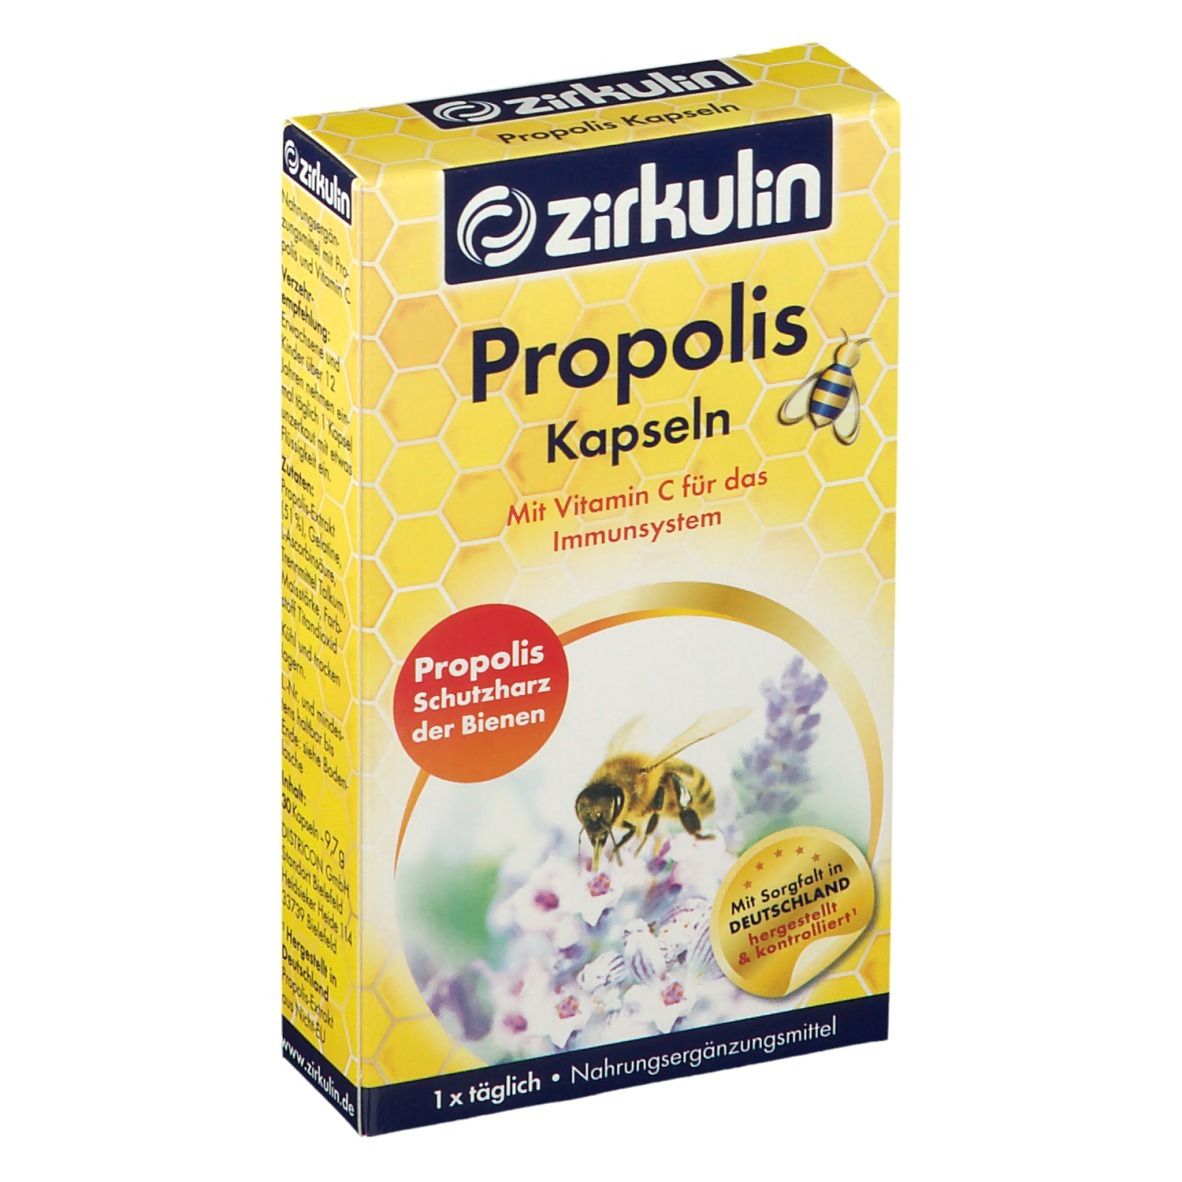 Zirkulin Propolis mit Vitamin C